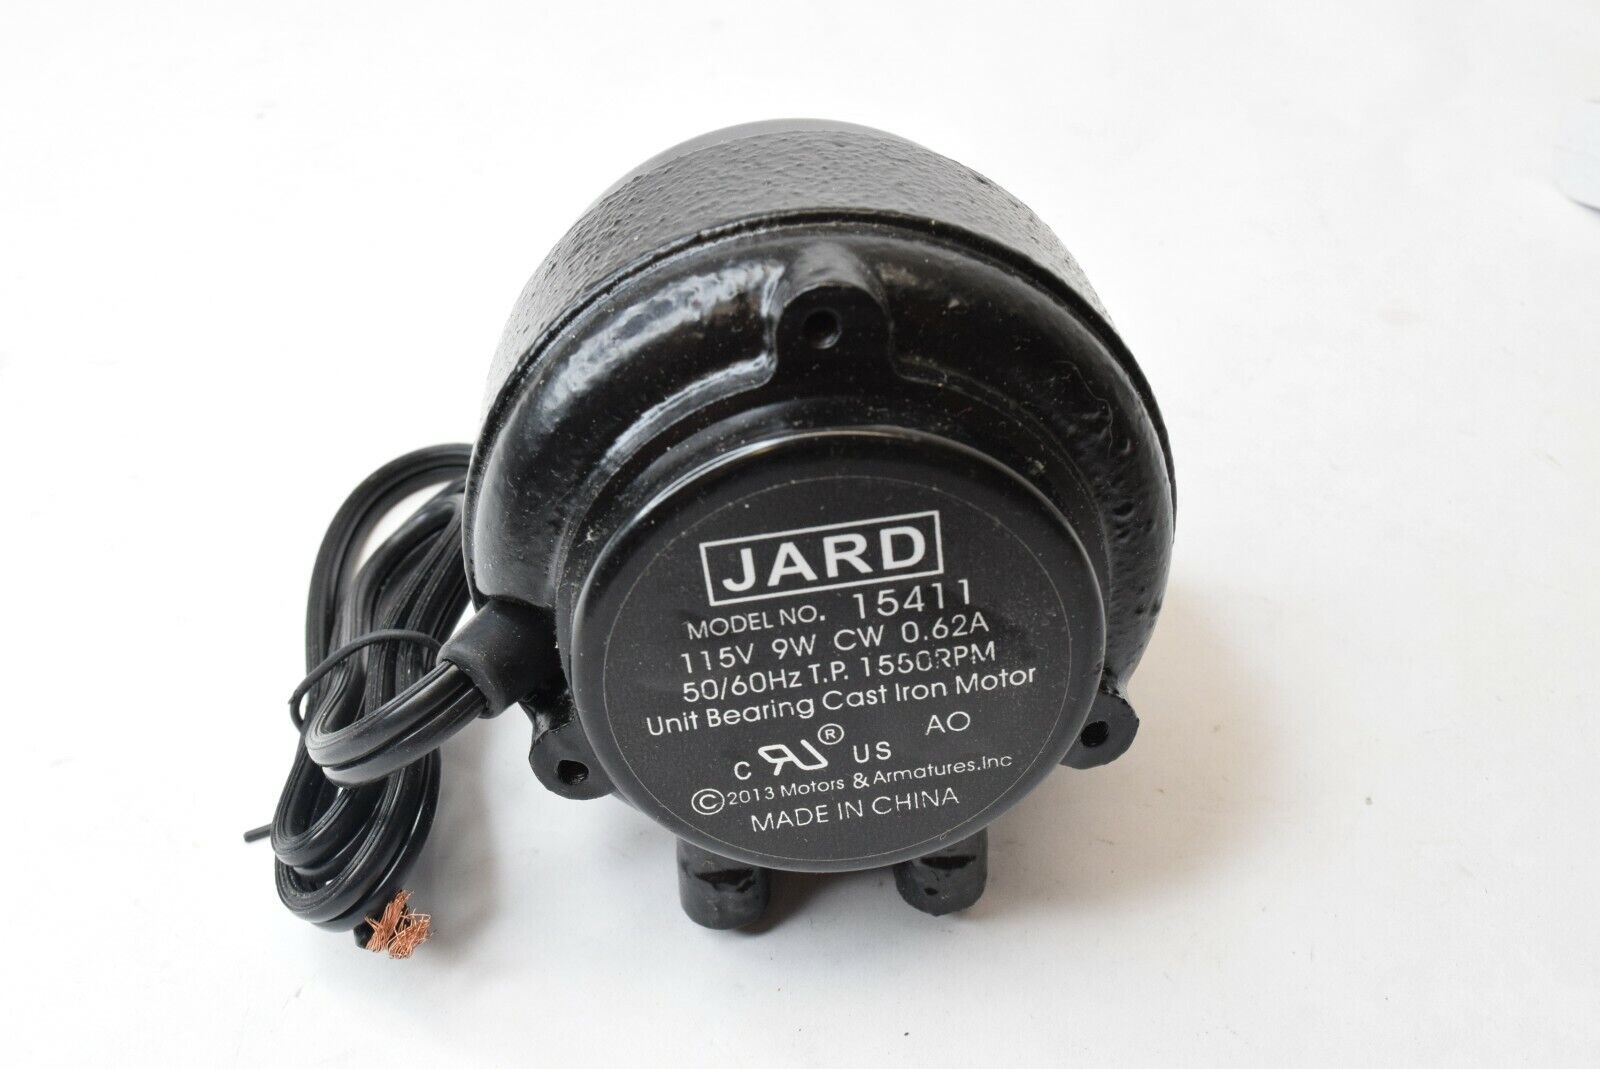 JARD 15411 115V 9W CW 0.62A 50/60Hz Unit Bearing Cast Iron Motor